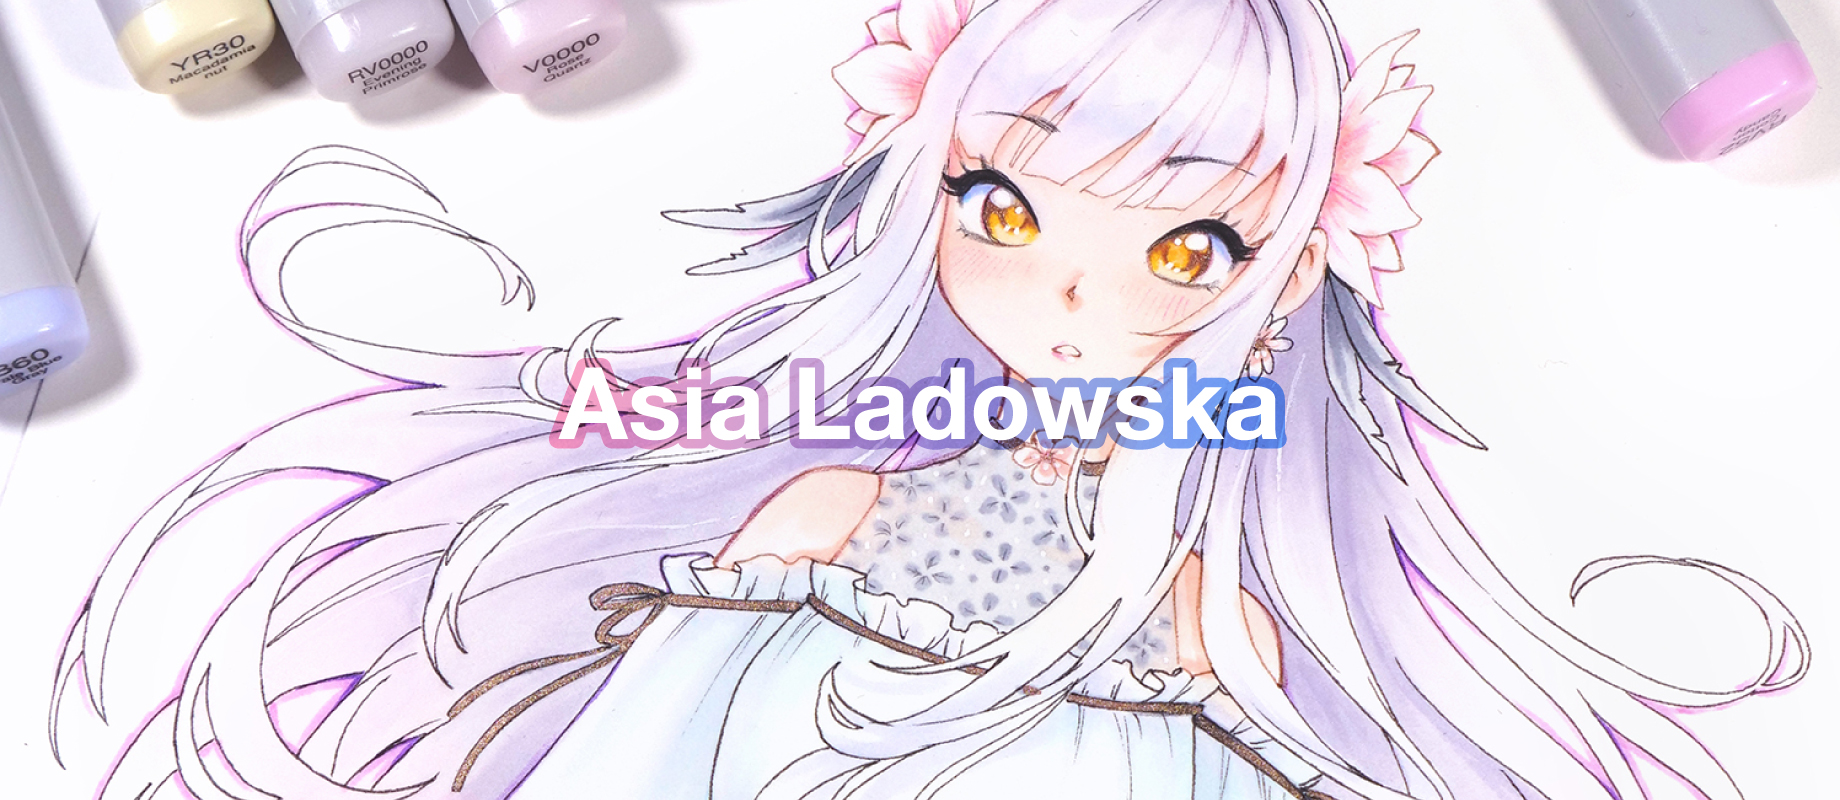 Asia Ladowska - COPIC Official Website